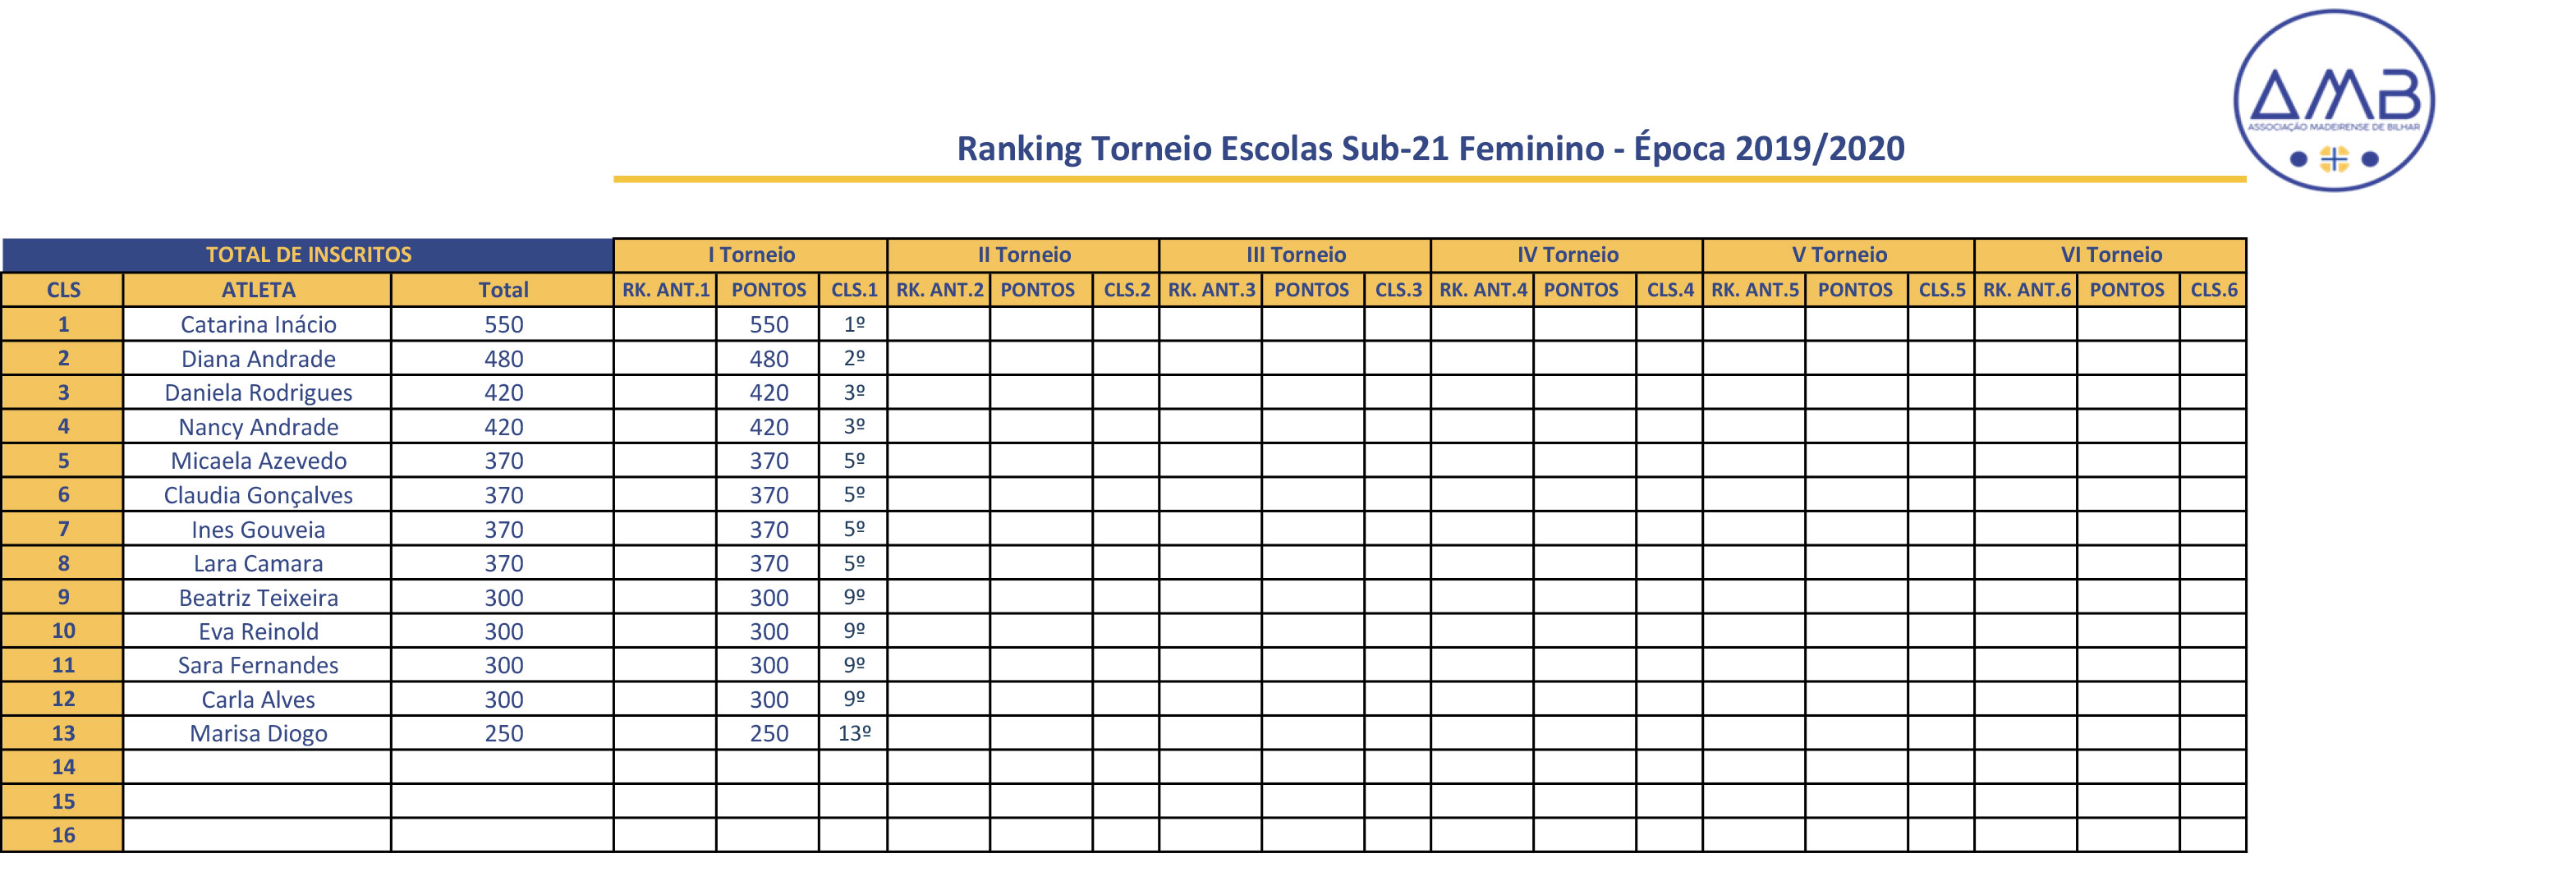 Ranking Torneio Escolas Sub-13 Masculino - Época 2019/2020 Diagrama